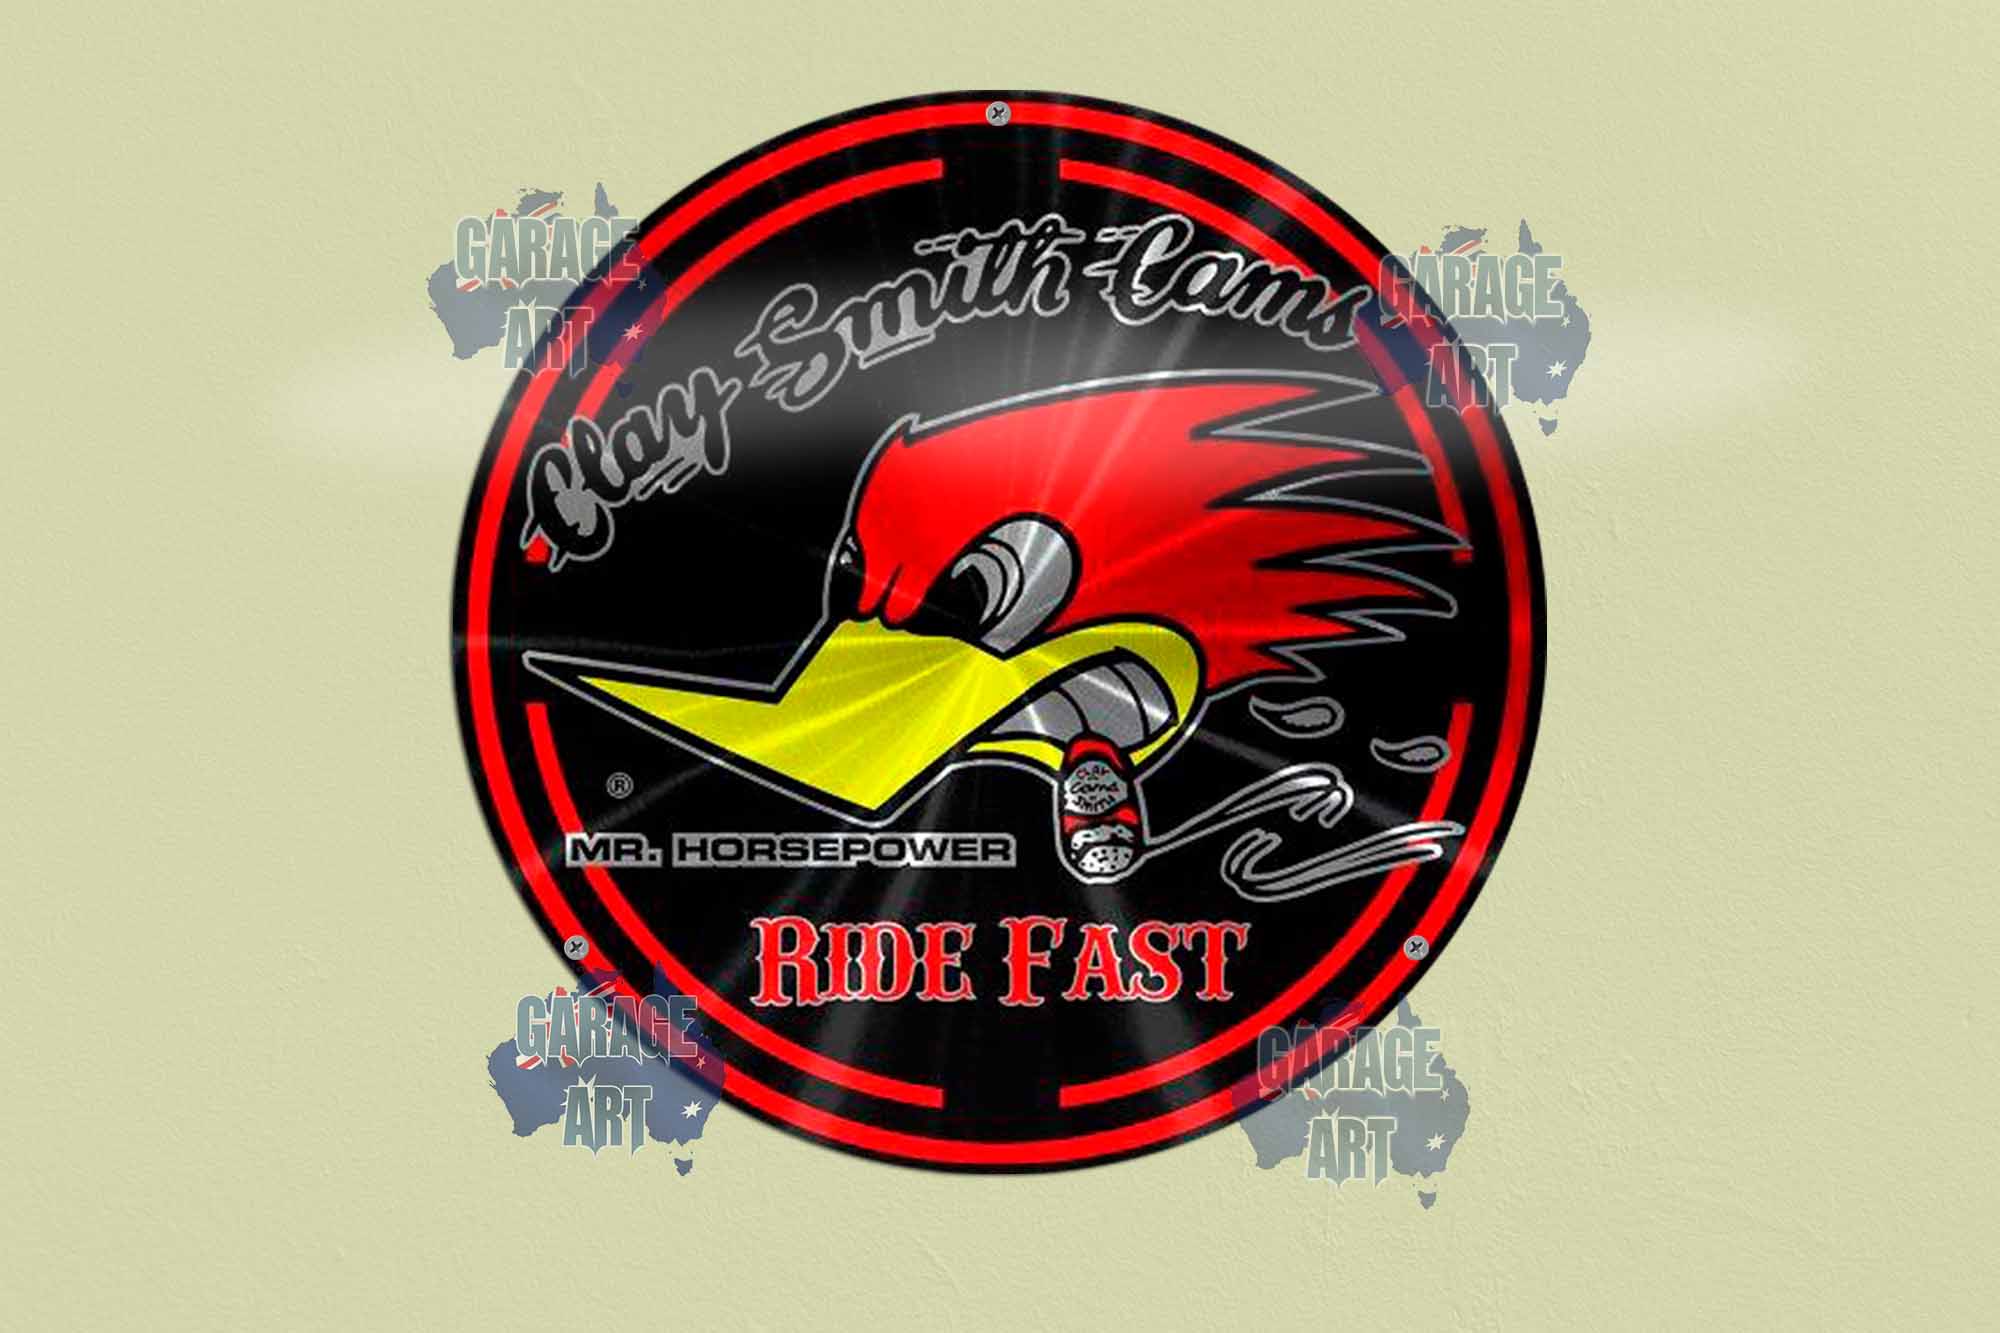 Clay Smith Cams Ride Fast 355mmDia Tin Sign freeshipping - garageartaustralia